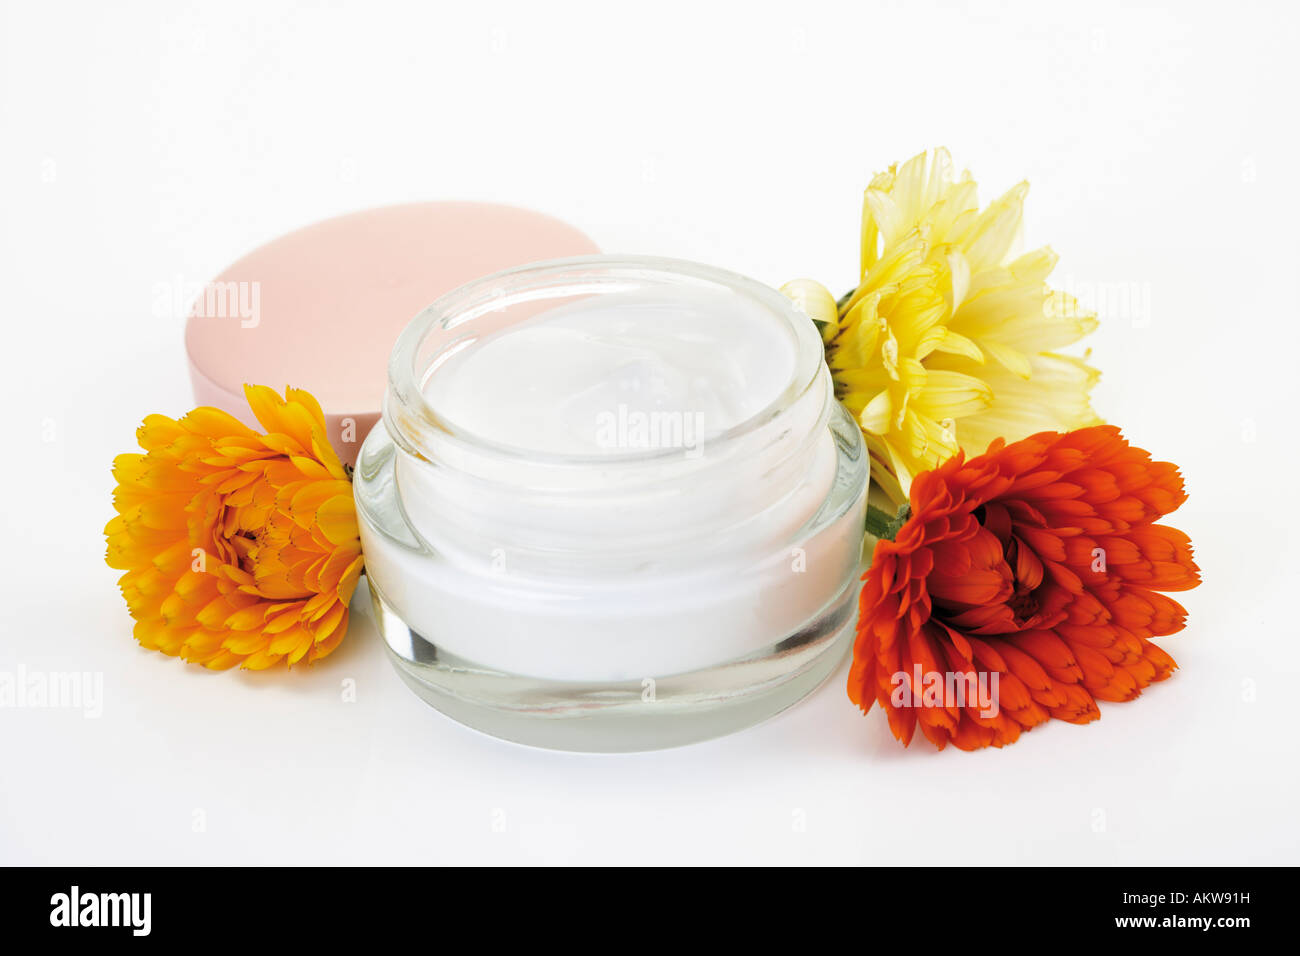 Marigolds and marigold cream, close-up Stock Photo